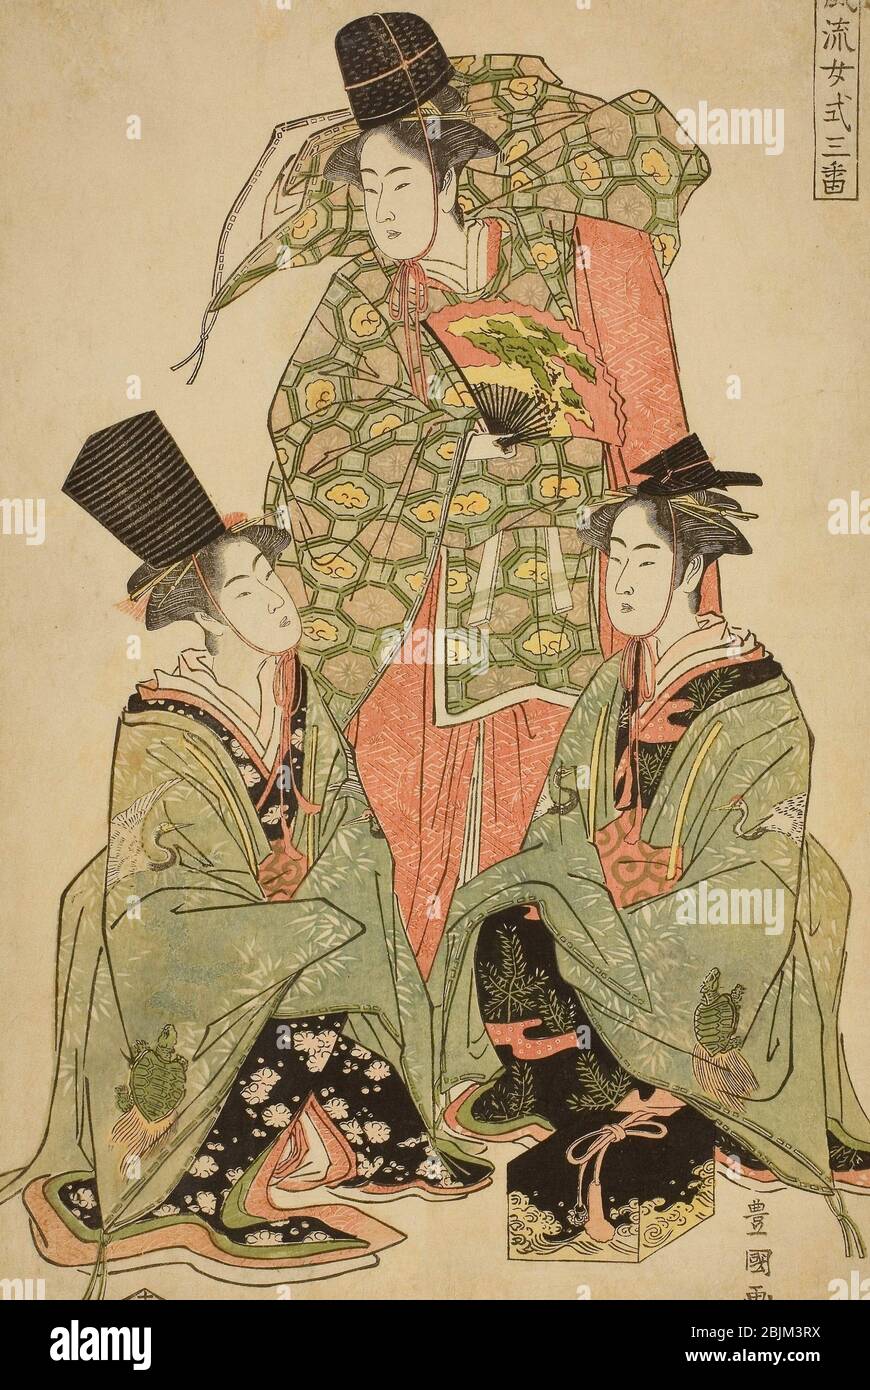 Author: Utagawa Toyokuni I. A Fashionable Female Version of the Shikisanban Dance (Furyu onna shikisanban) - c. 1788/89 - Utagawa Toyokuni I ^ O S> Stock Photo